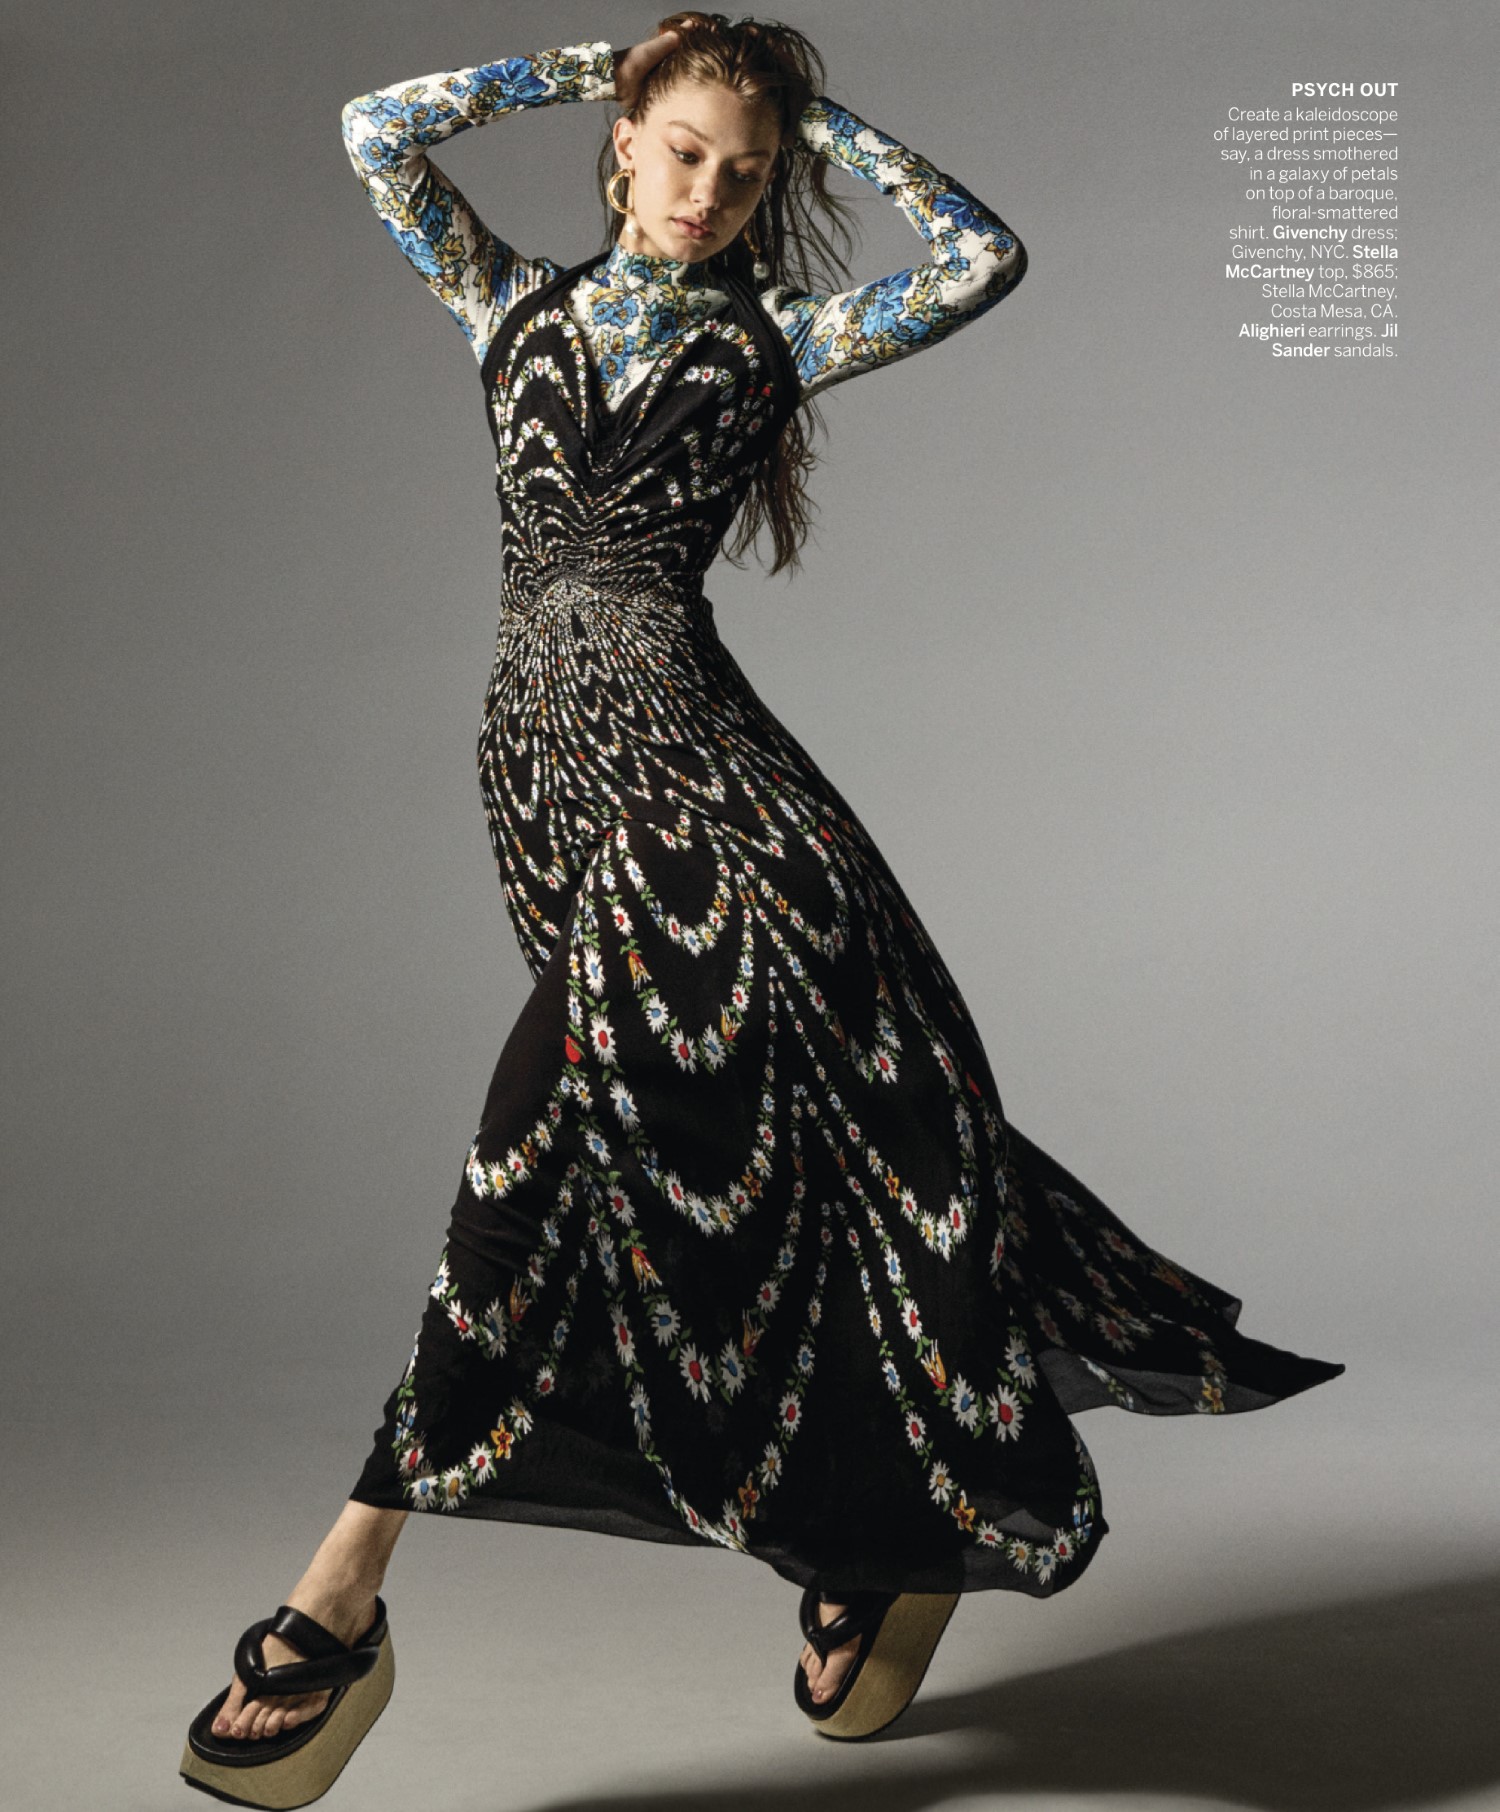 Gigi Hadid by Daniel Jackson for Vogue US Mar 2019 (4).jpg